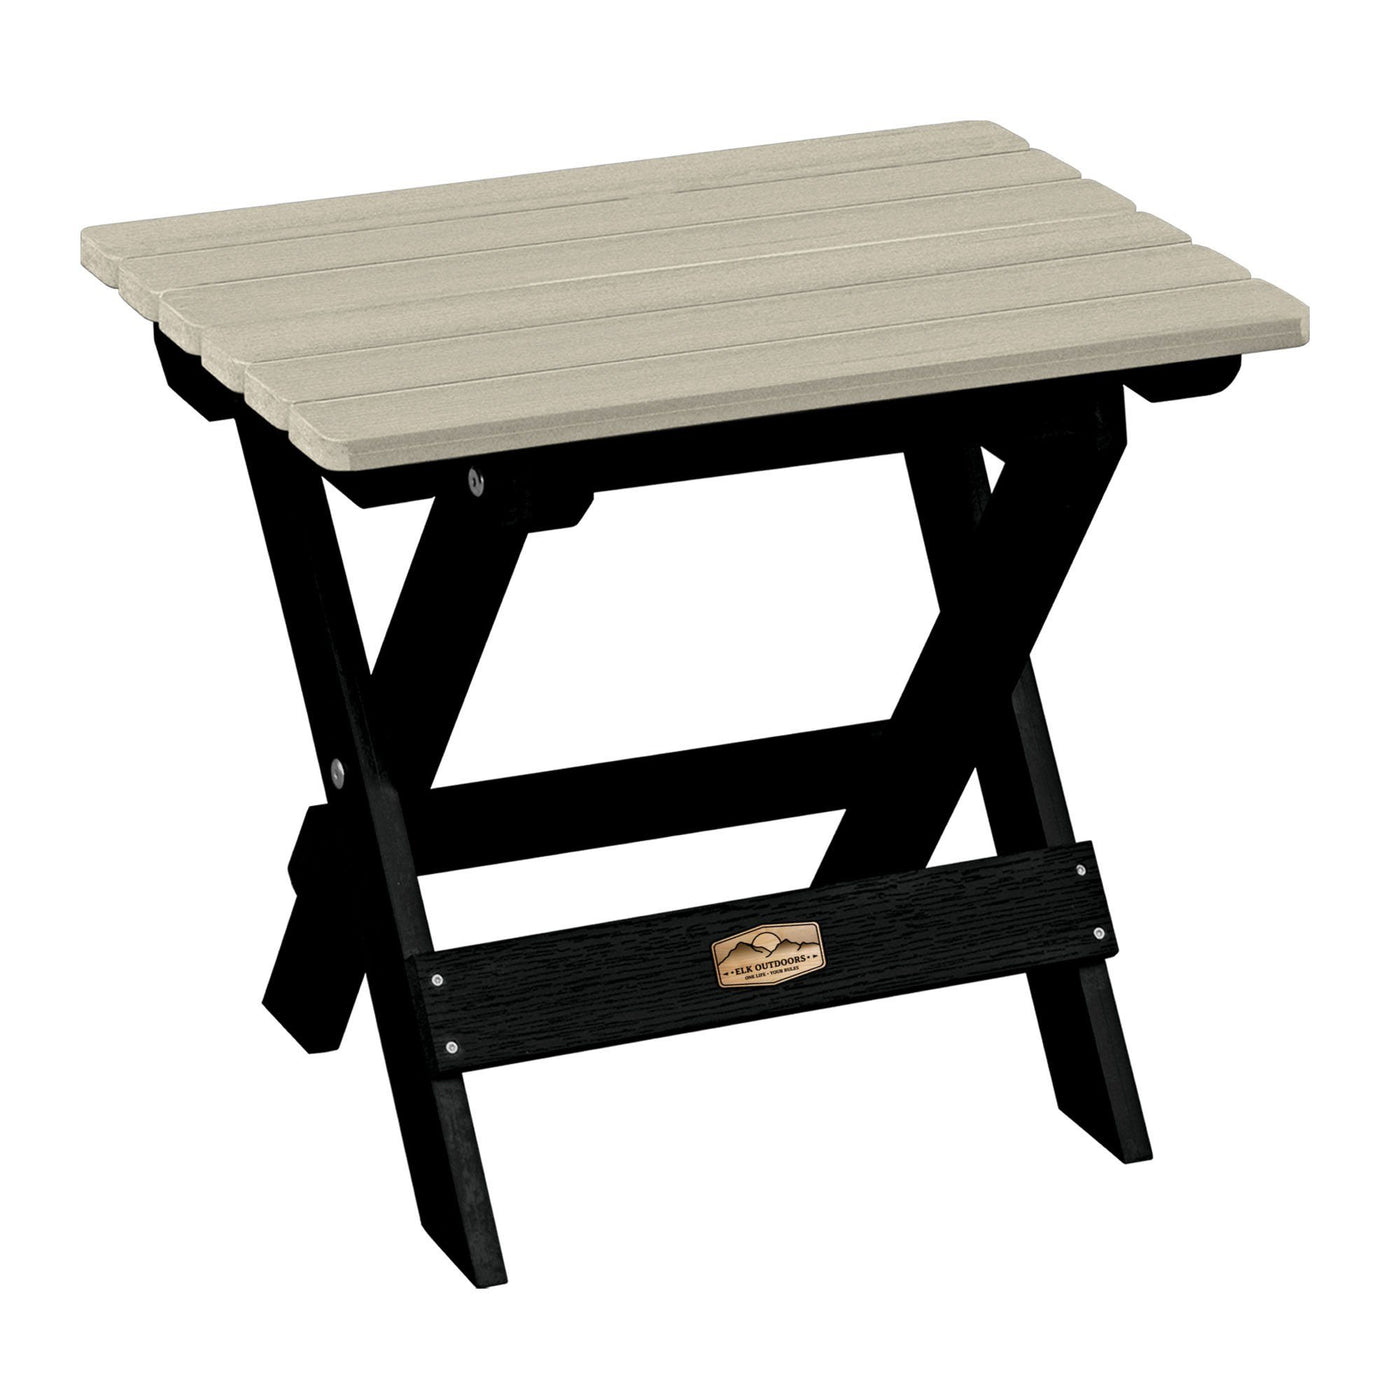 The Essential Folding Side Table ELK OUTDOORS® Vapor 